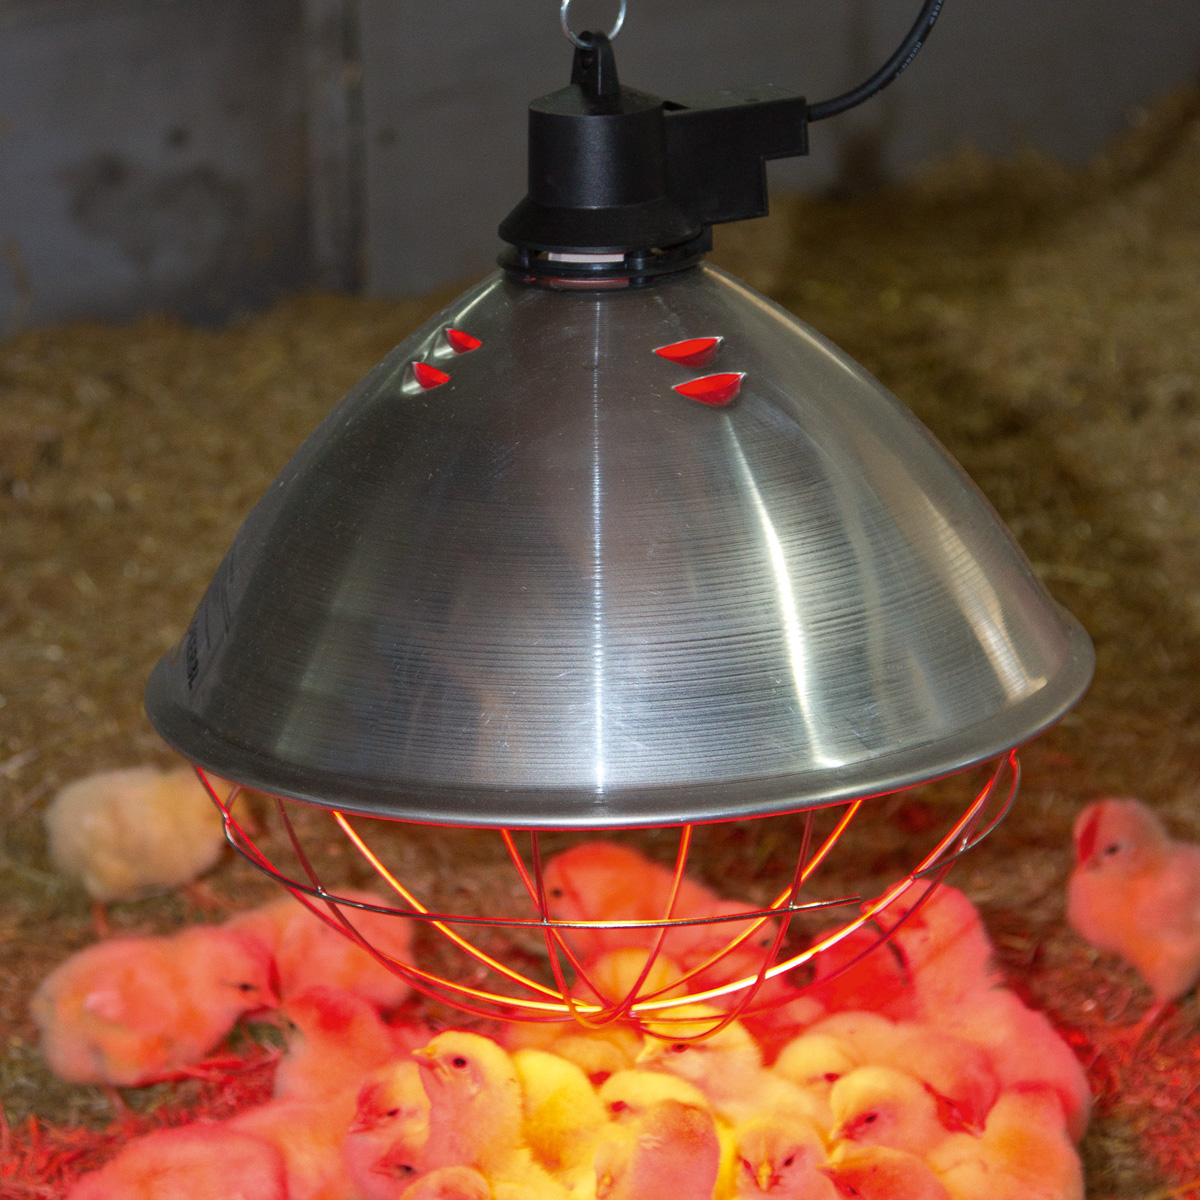 Dispositif de rayonnement de chaleur infrarouge avec lampe en verre dur 250 W, rouge